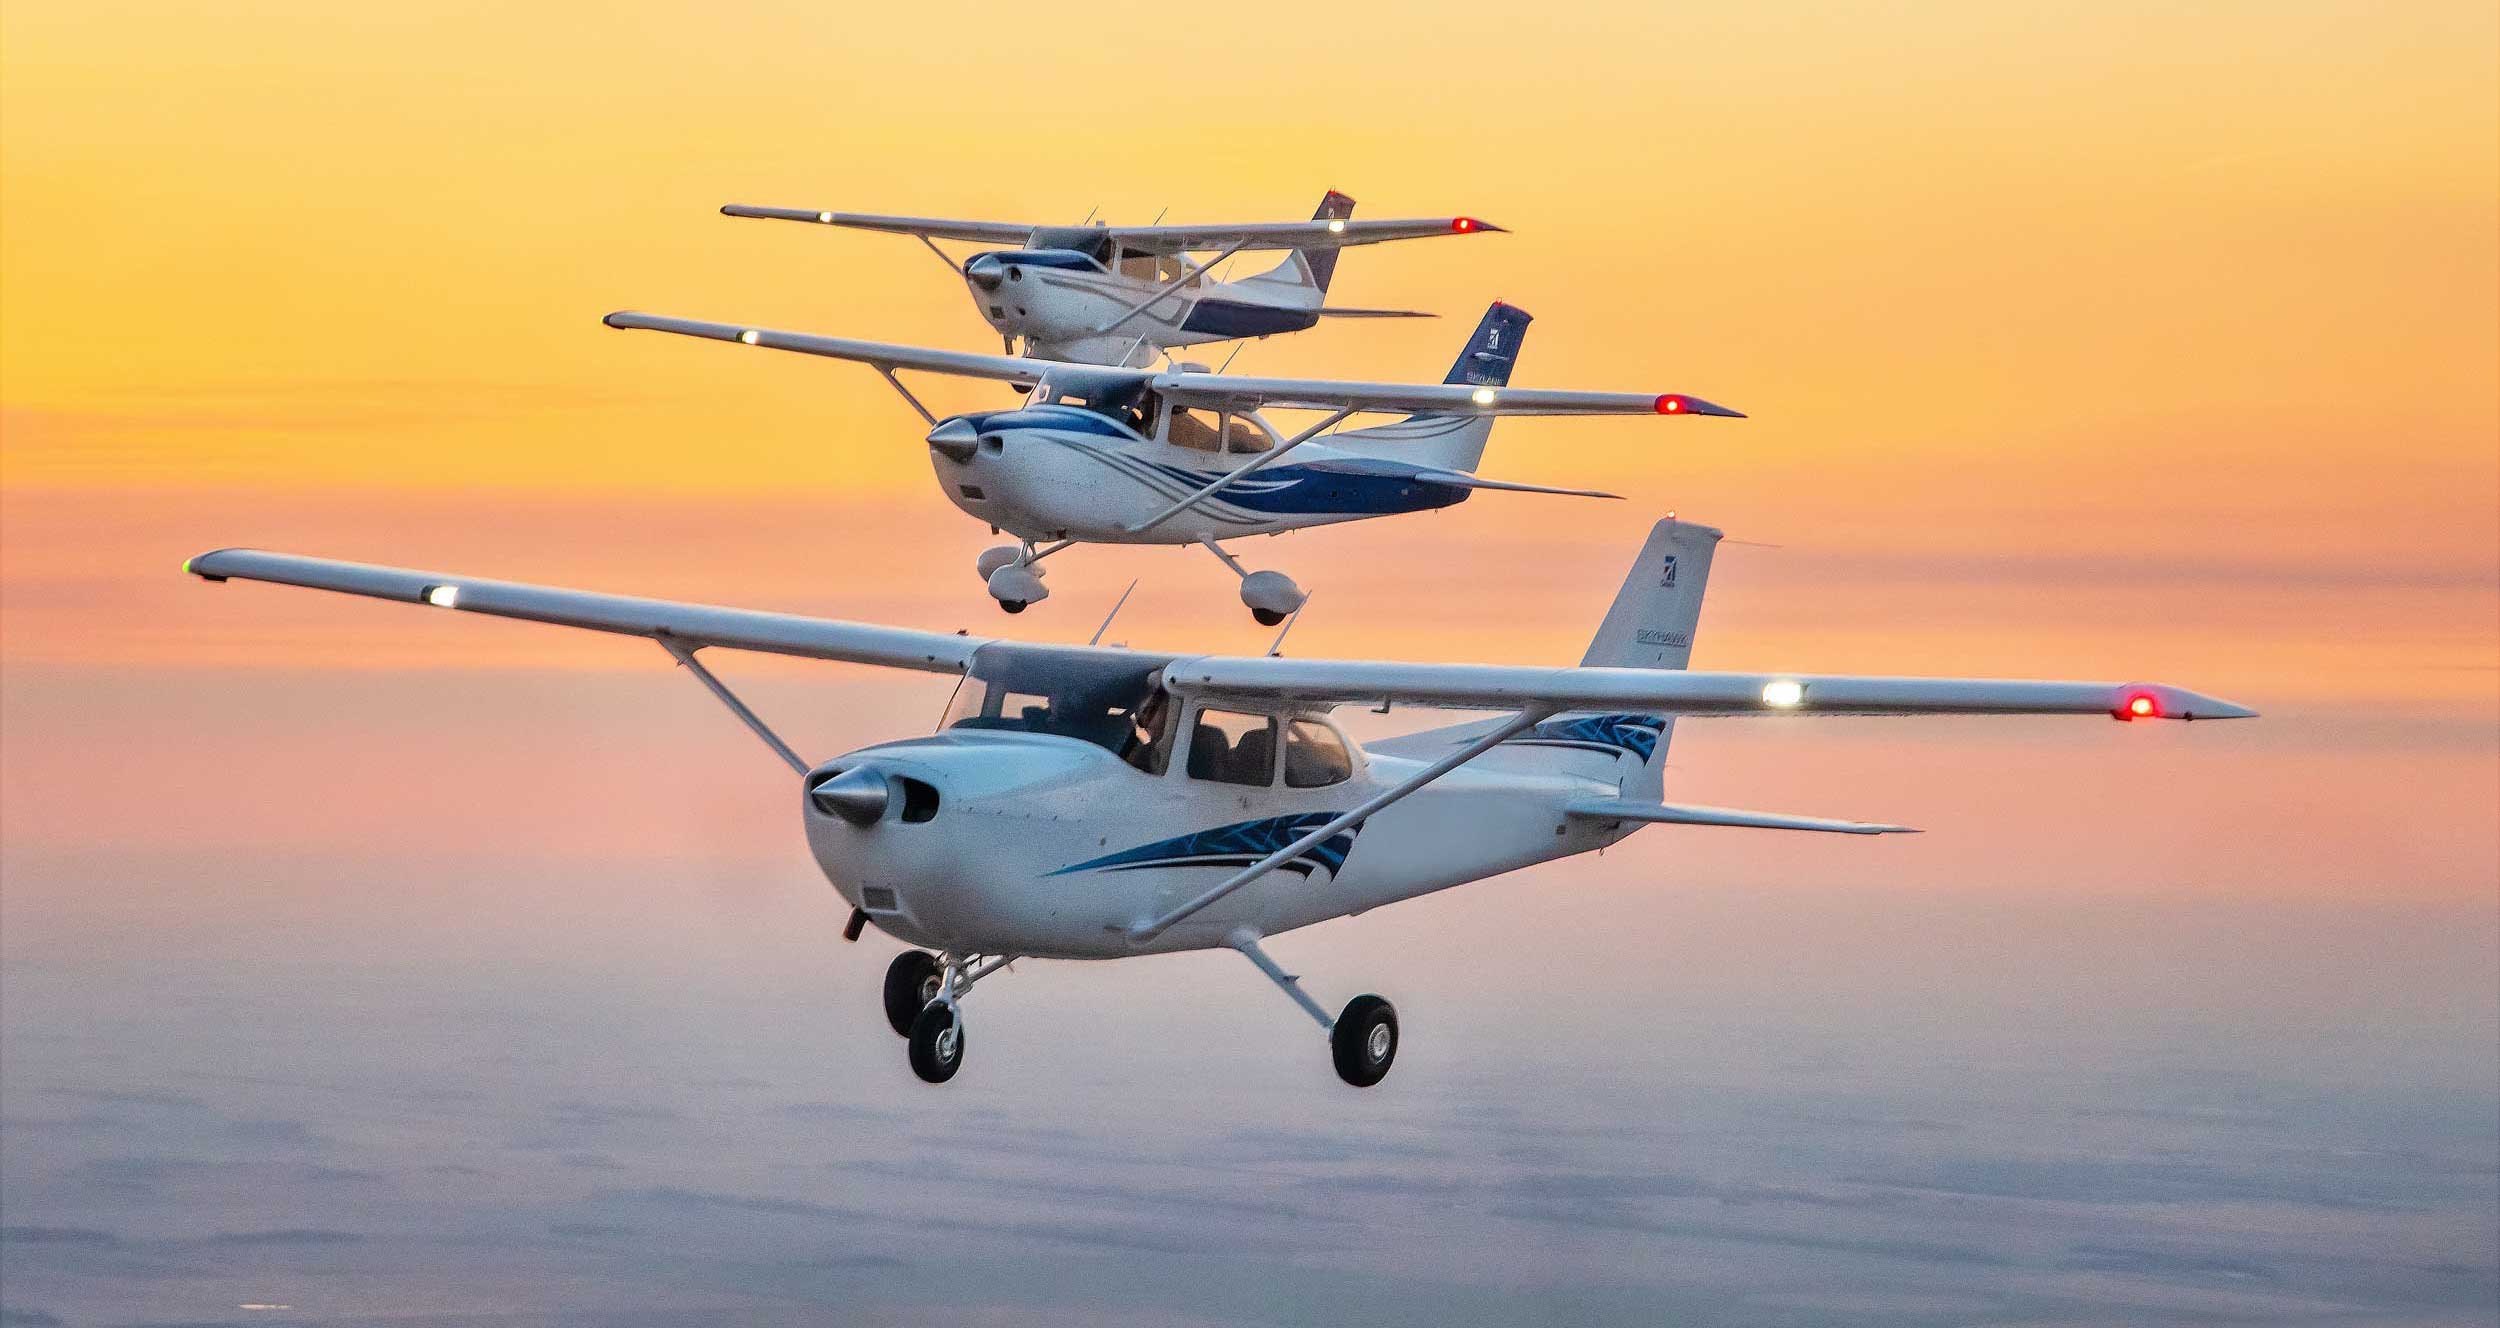 Cessna piston singles